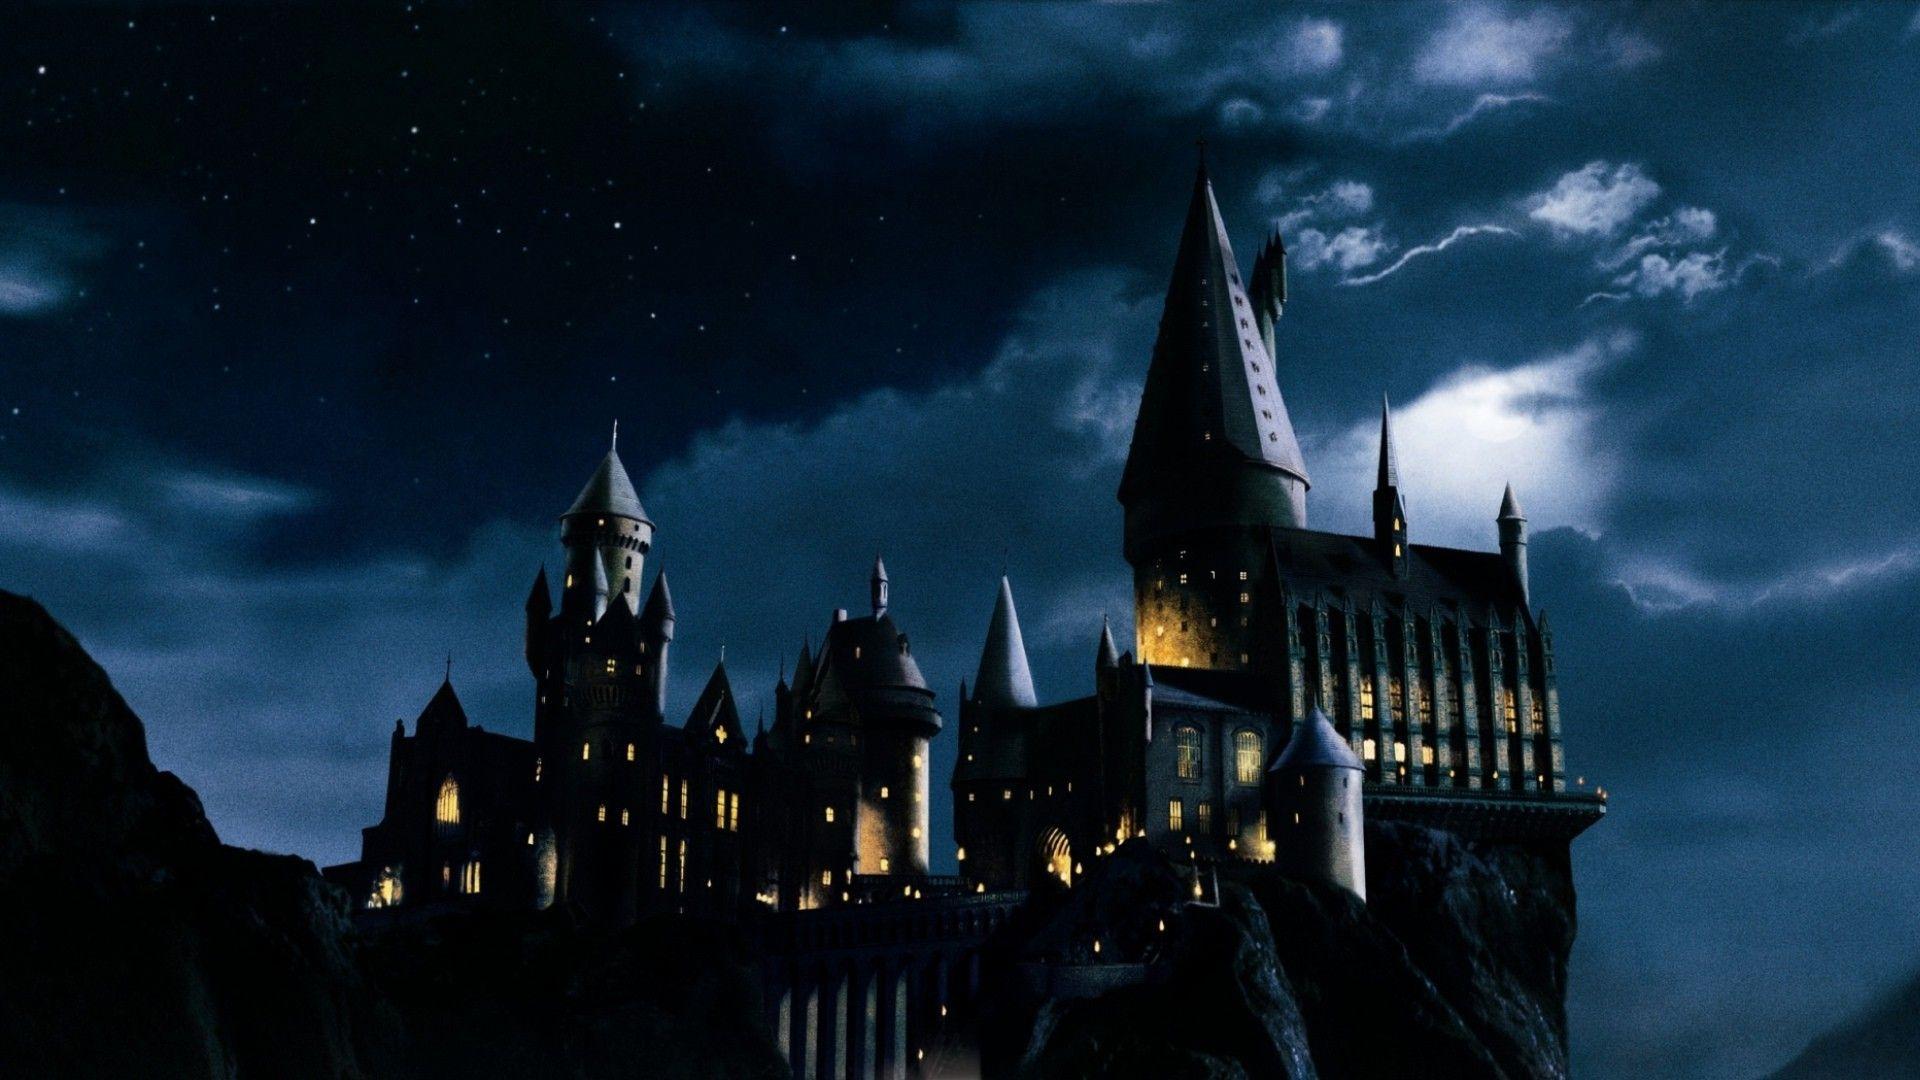 Harry Potter Hogwarts Wallpaper. Harry potter wallpaper, Hogwarts castle, Desktop wallpaper harry potter